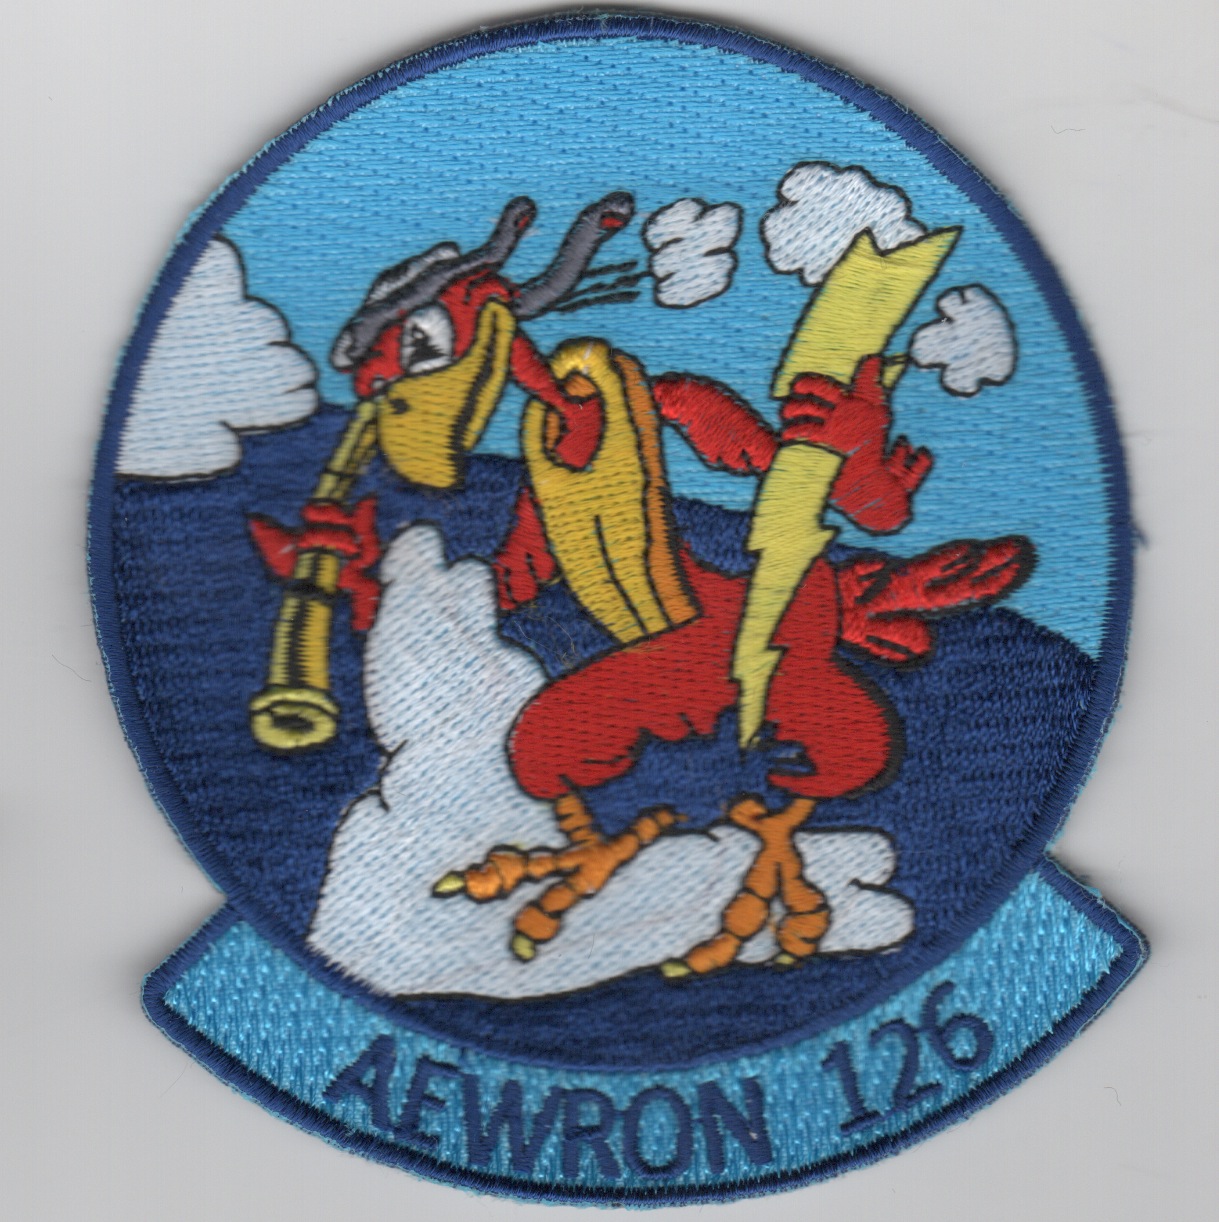 VAW-126 'AEWRON' Patch (Blue)